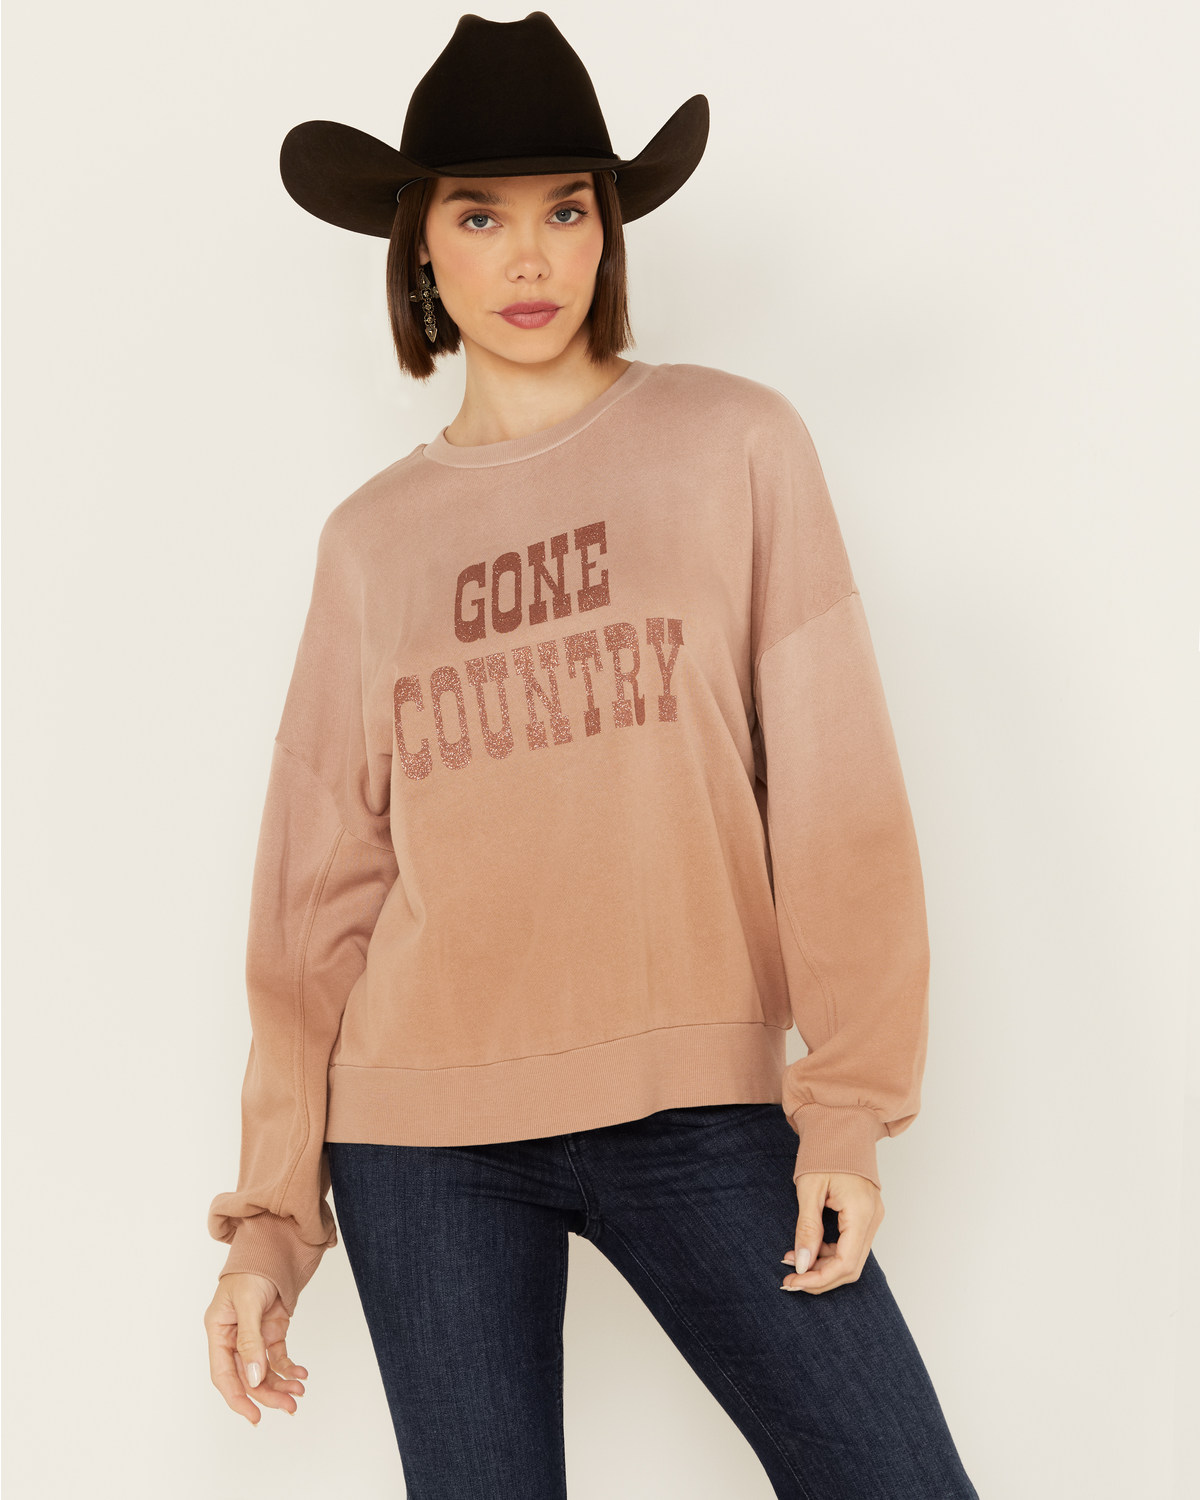 White Crow Women's Glitter Gone Country Graphic Sweatshirt